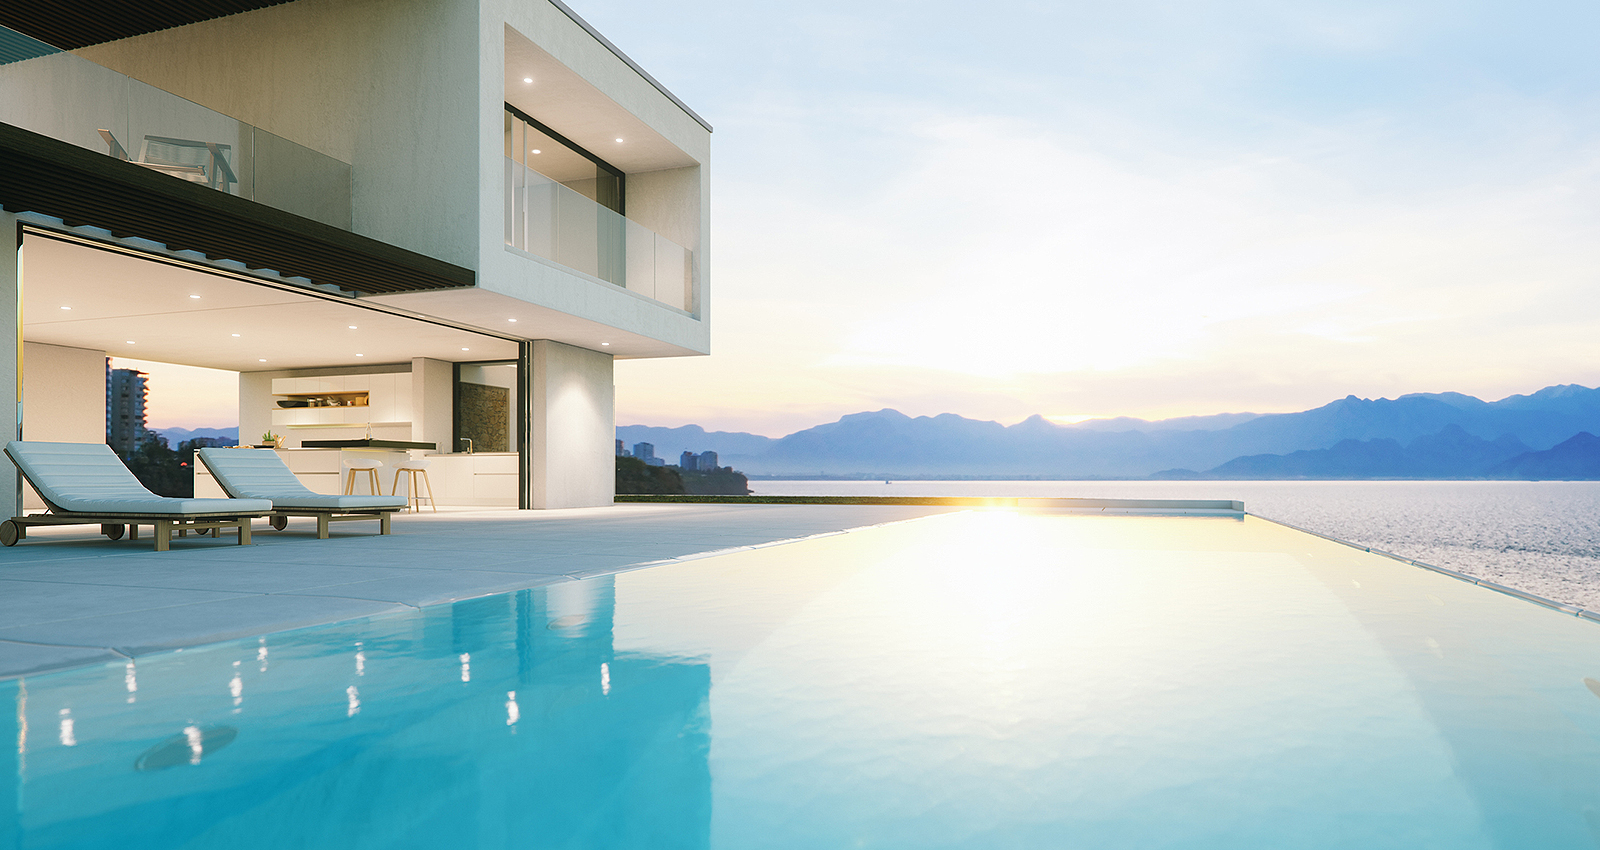 Infinity pool of a luxury home in La Cresta, CA